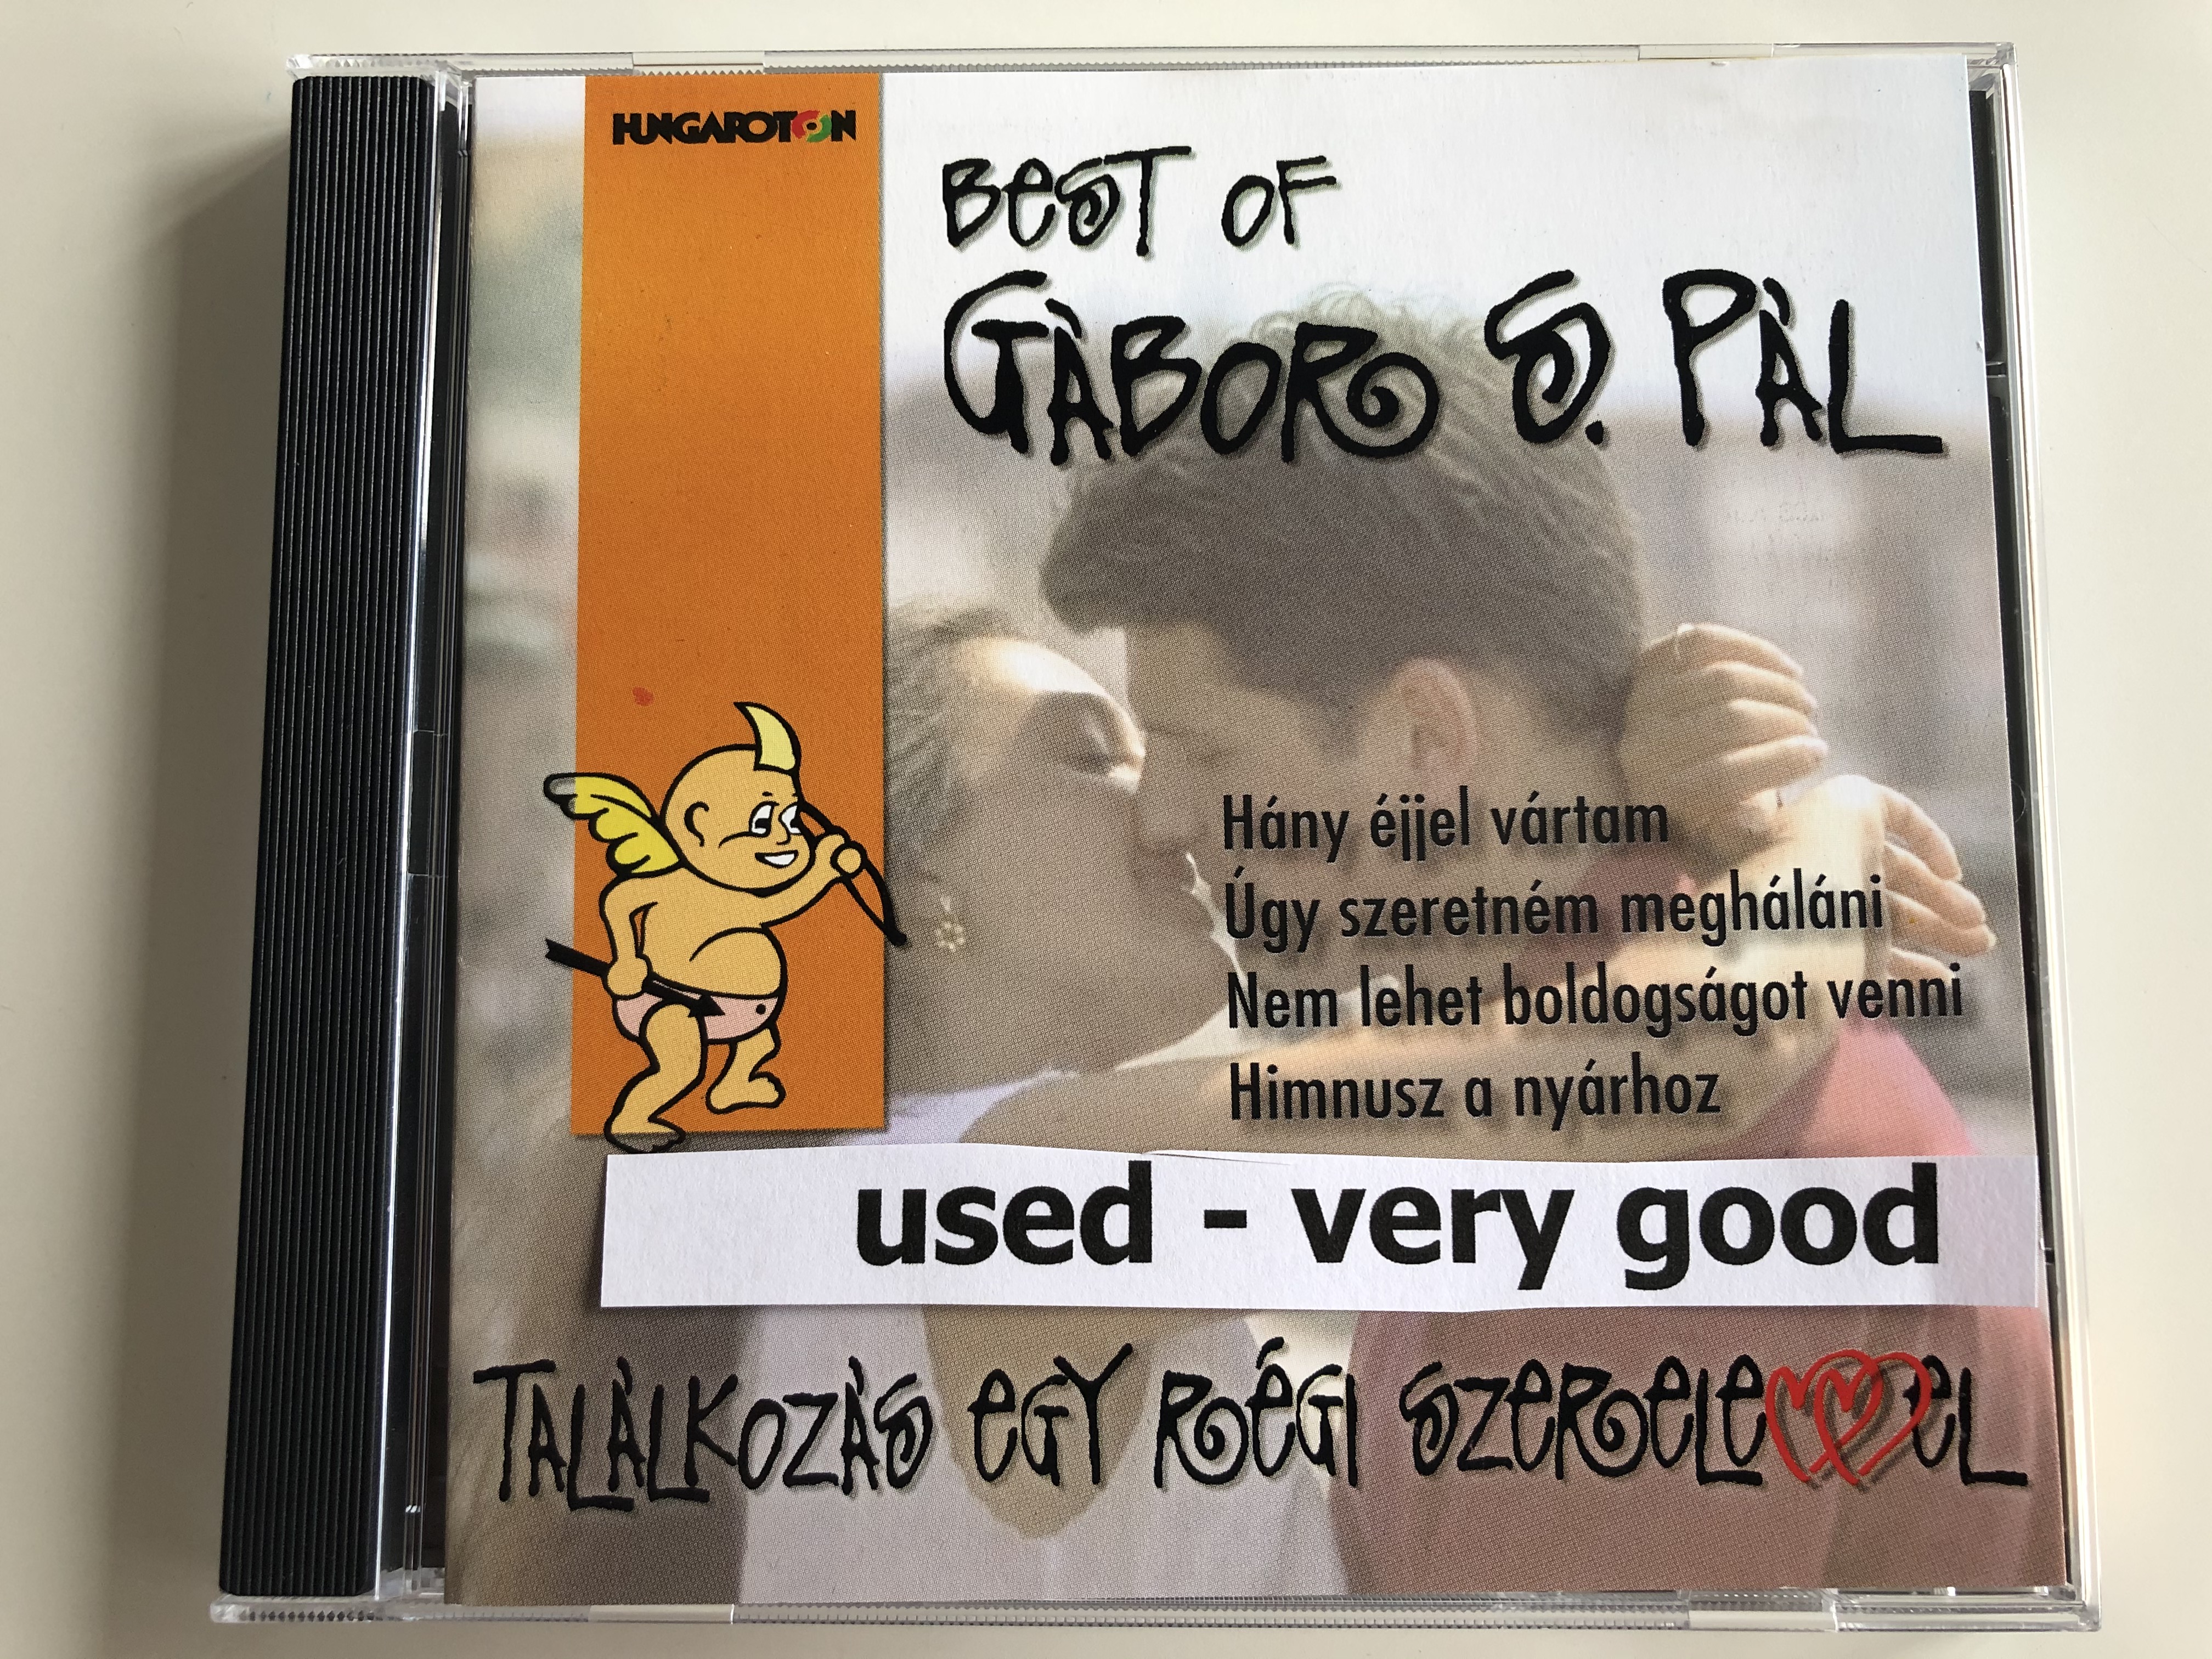 best-of-g-bor-s.-p-l-tal-lkoz-s-egy-r-gi-szerelemmel-hany-ejjel-vartam-gy-szeretn-m-megh-l-lni-nem-lehet-boldogs-got-venni-himnusz-a-ny-rhoz-hungaroton-audio-cd-1998-hcd-16827-1-.jpg